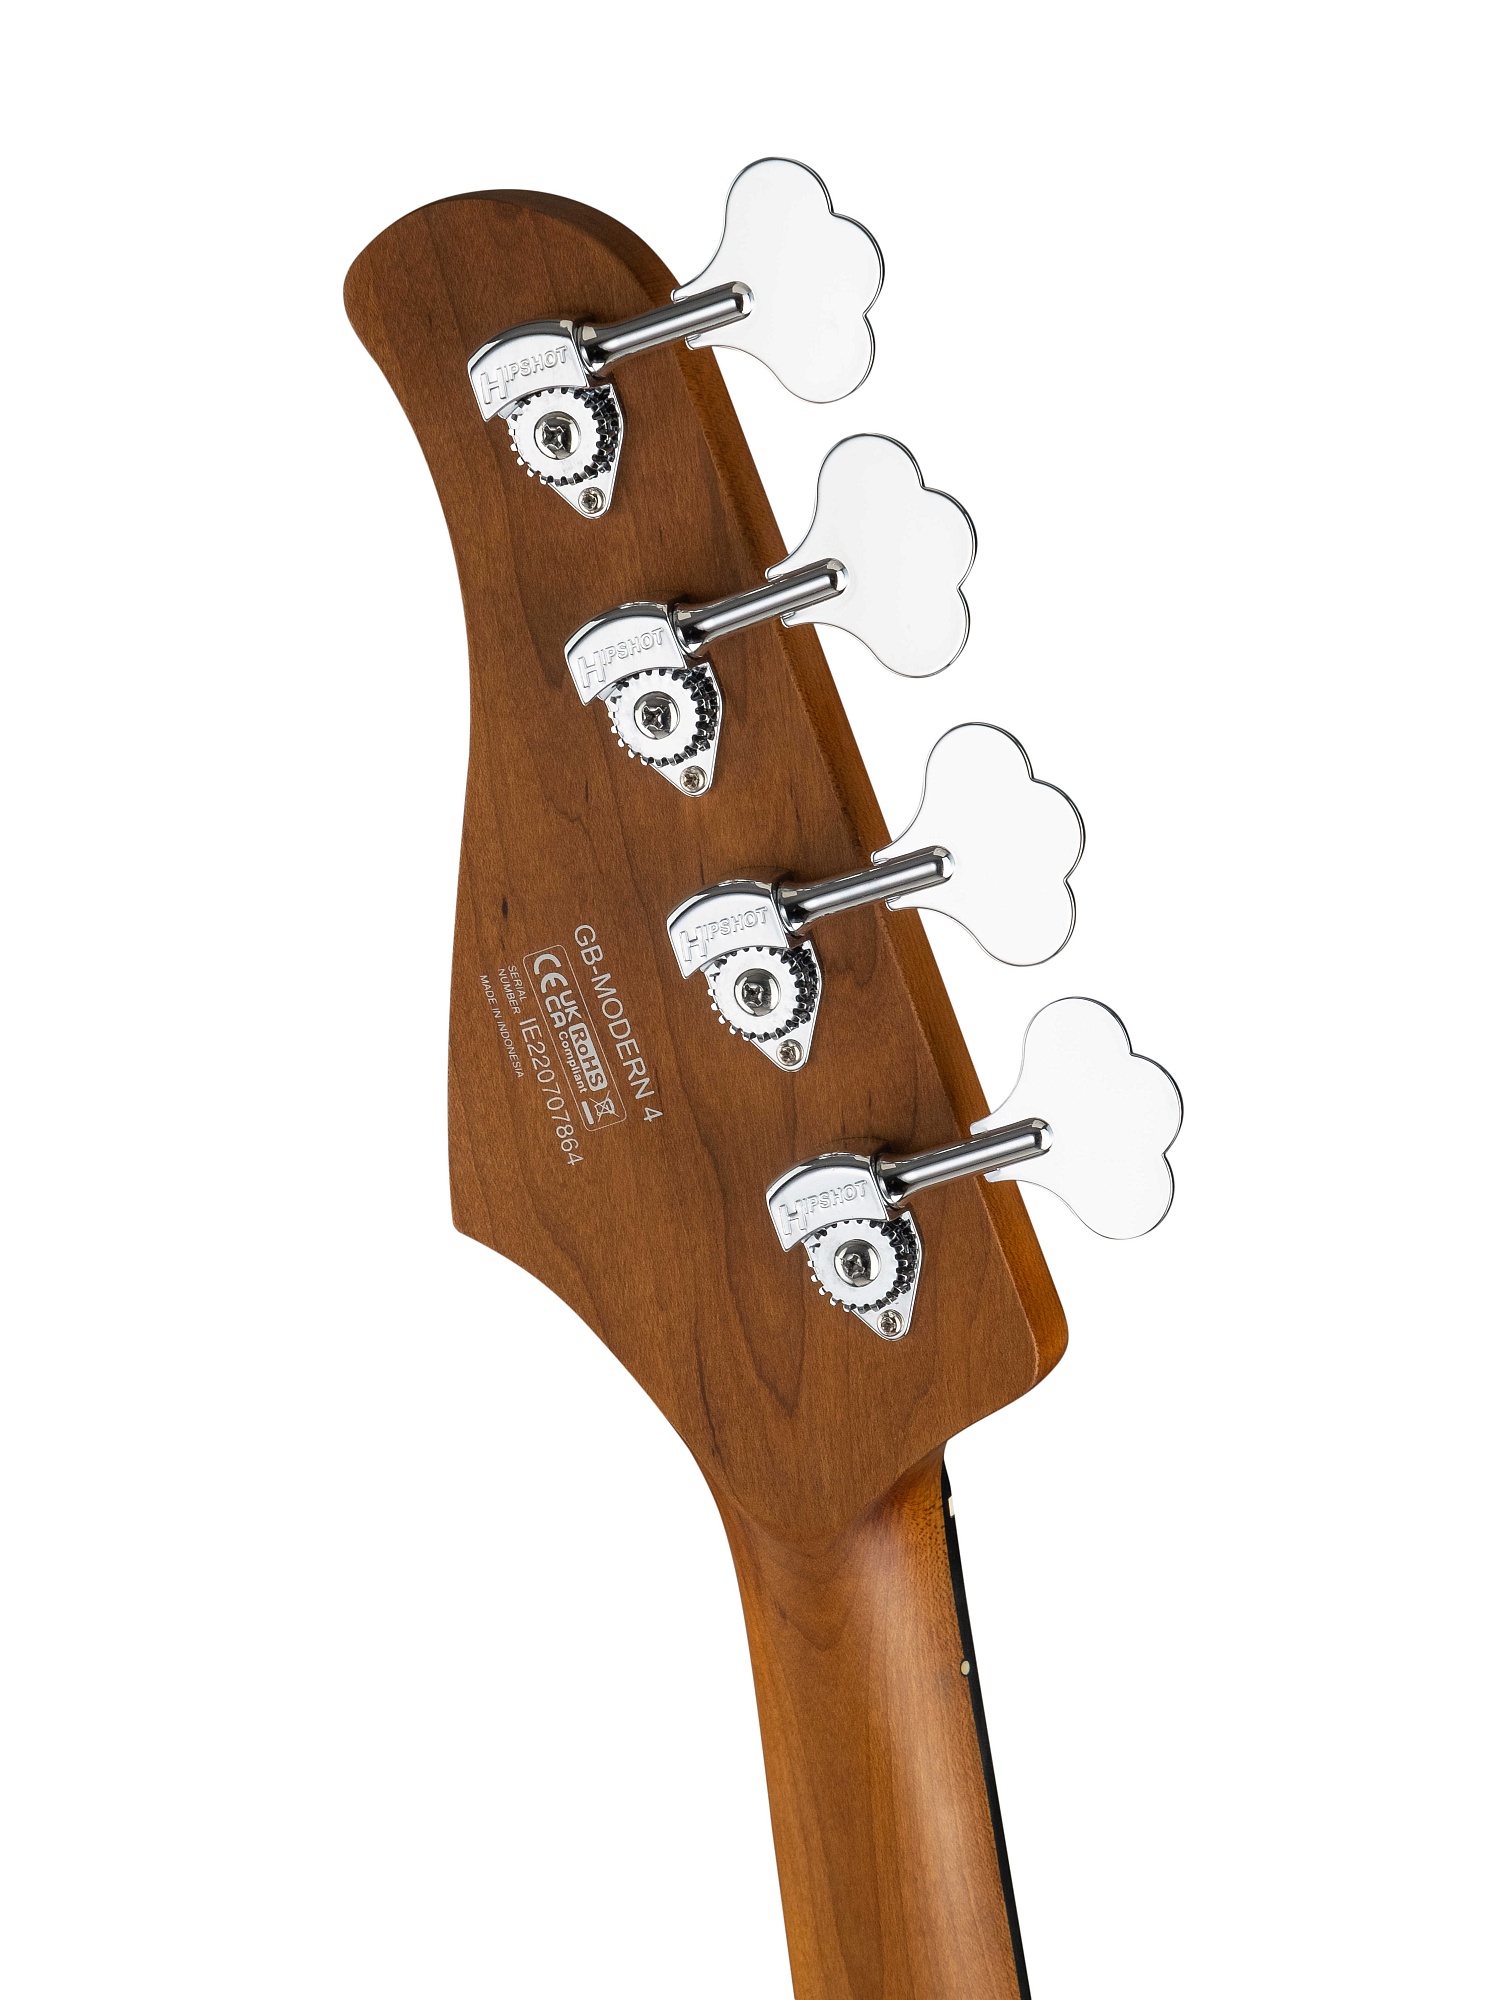 GB-Modern-4-OPCG GB Series Бас-гитара, серая, с чехлом, Cort купить в prostore.me